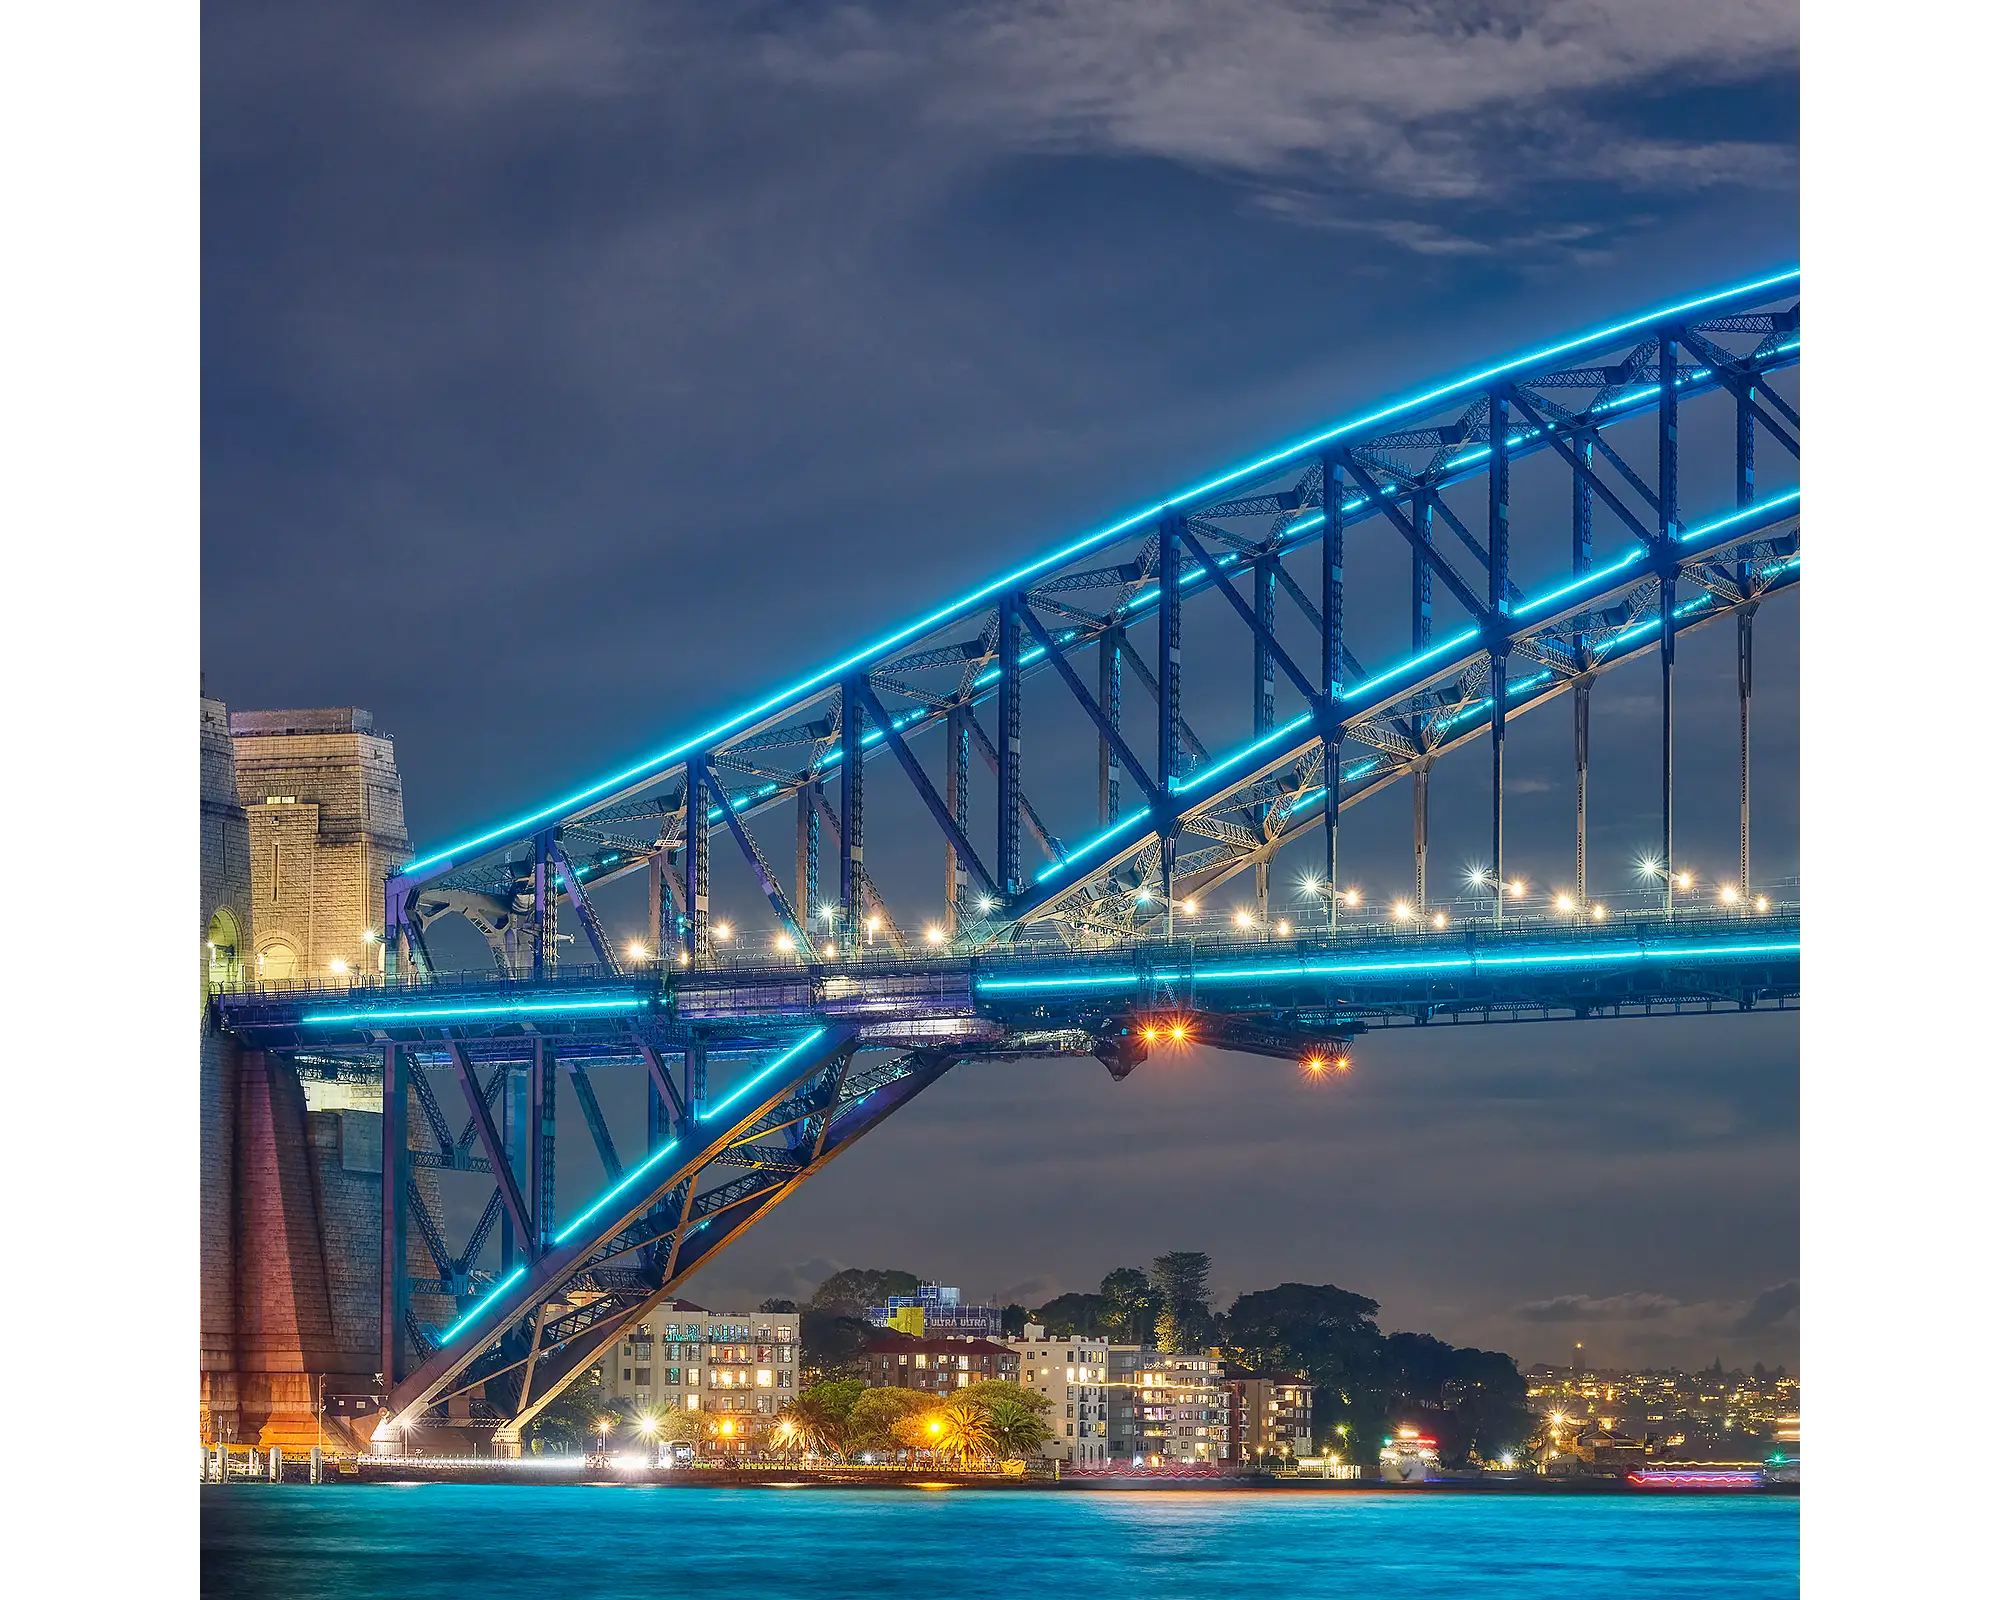 Sydney Harbour Bridge lit up during of Sydney Vivid festival.